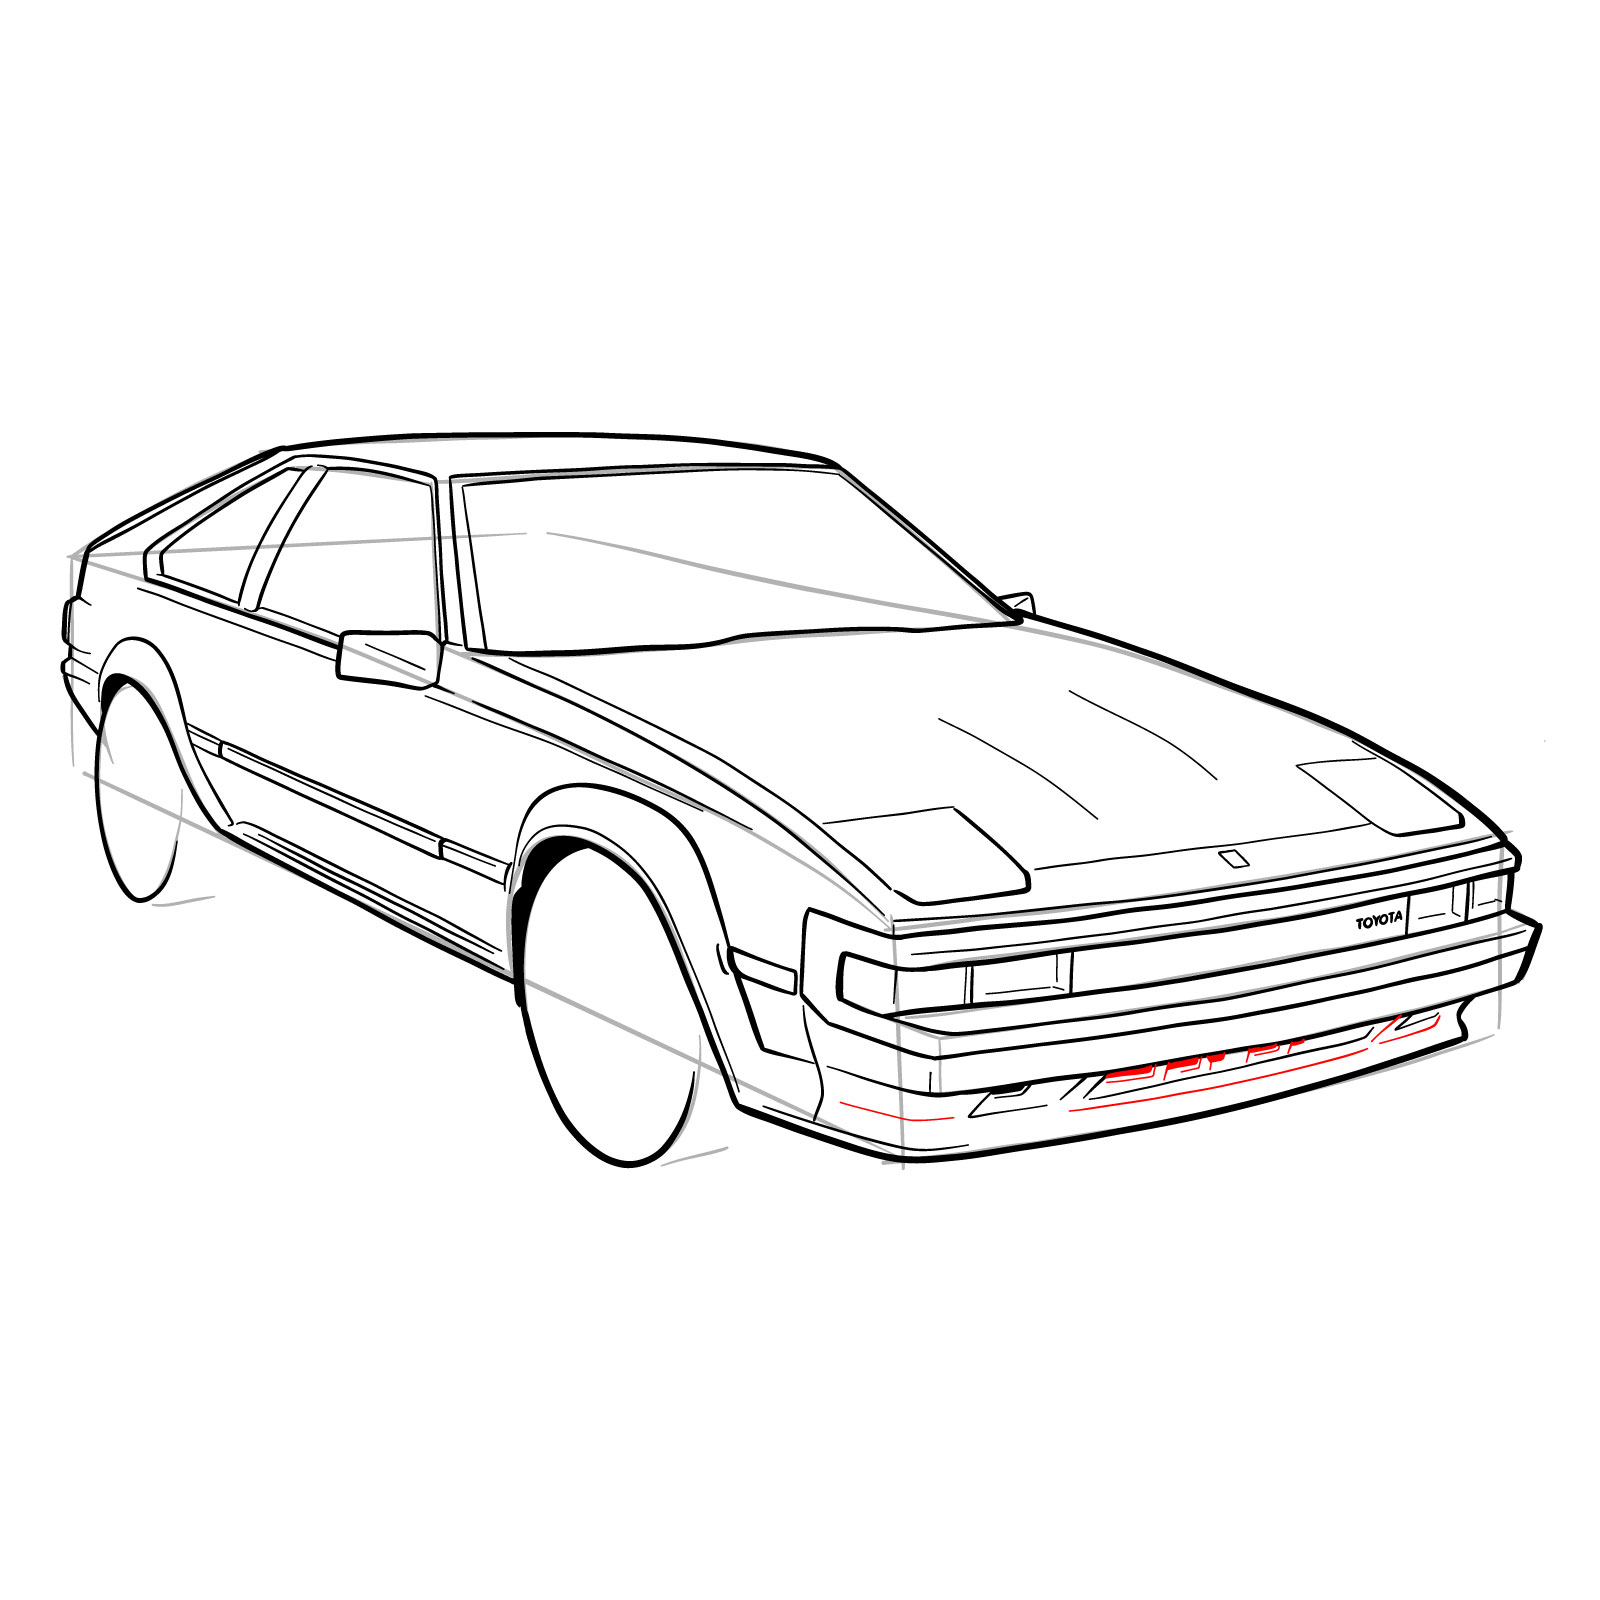 How to draw a 1985 Toyota Celica Supra P Type MK 2 - step 30